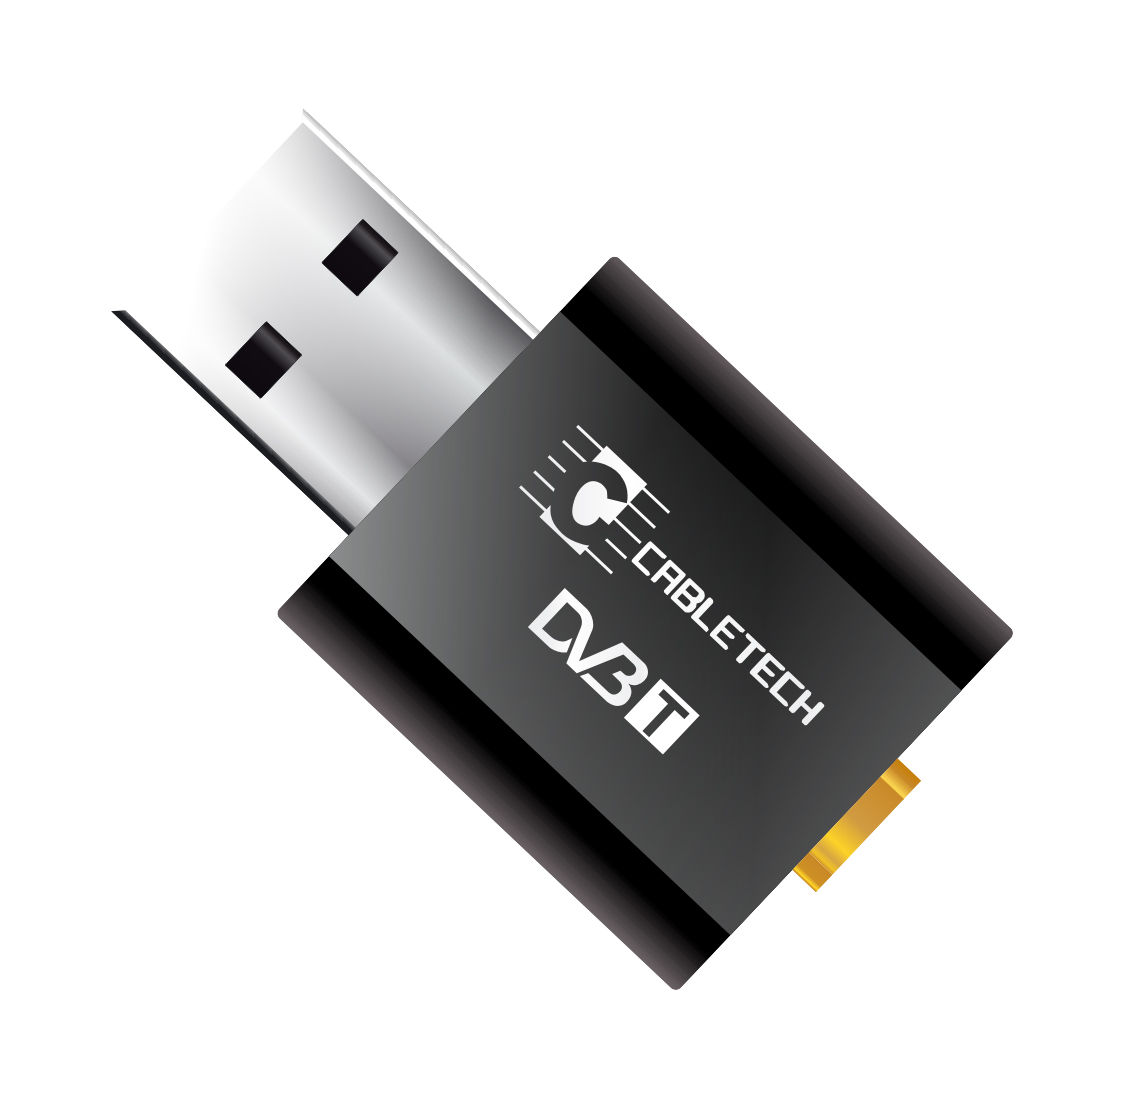 Cabletech: tuner USB w wersji mikro